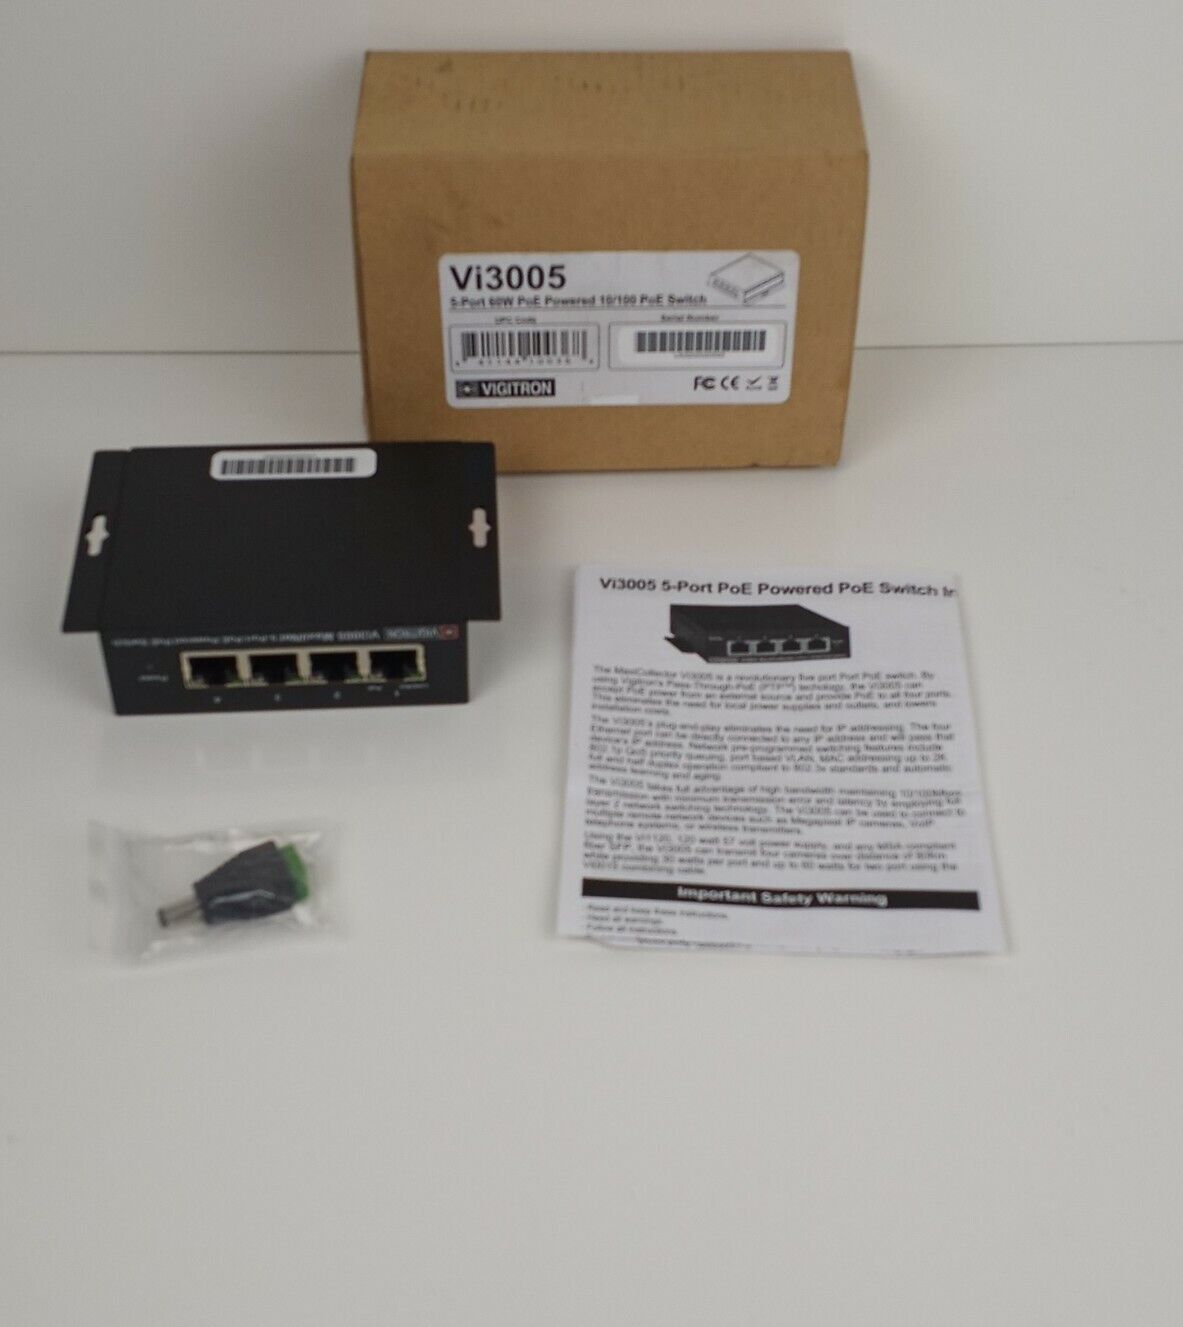 Vigitron Vi3005 MaxiiNet 5-Port PoE Powered PoE Switch 